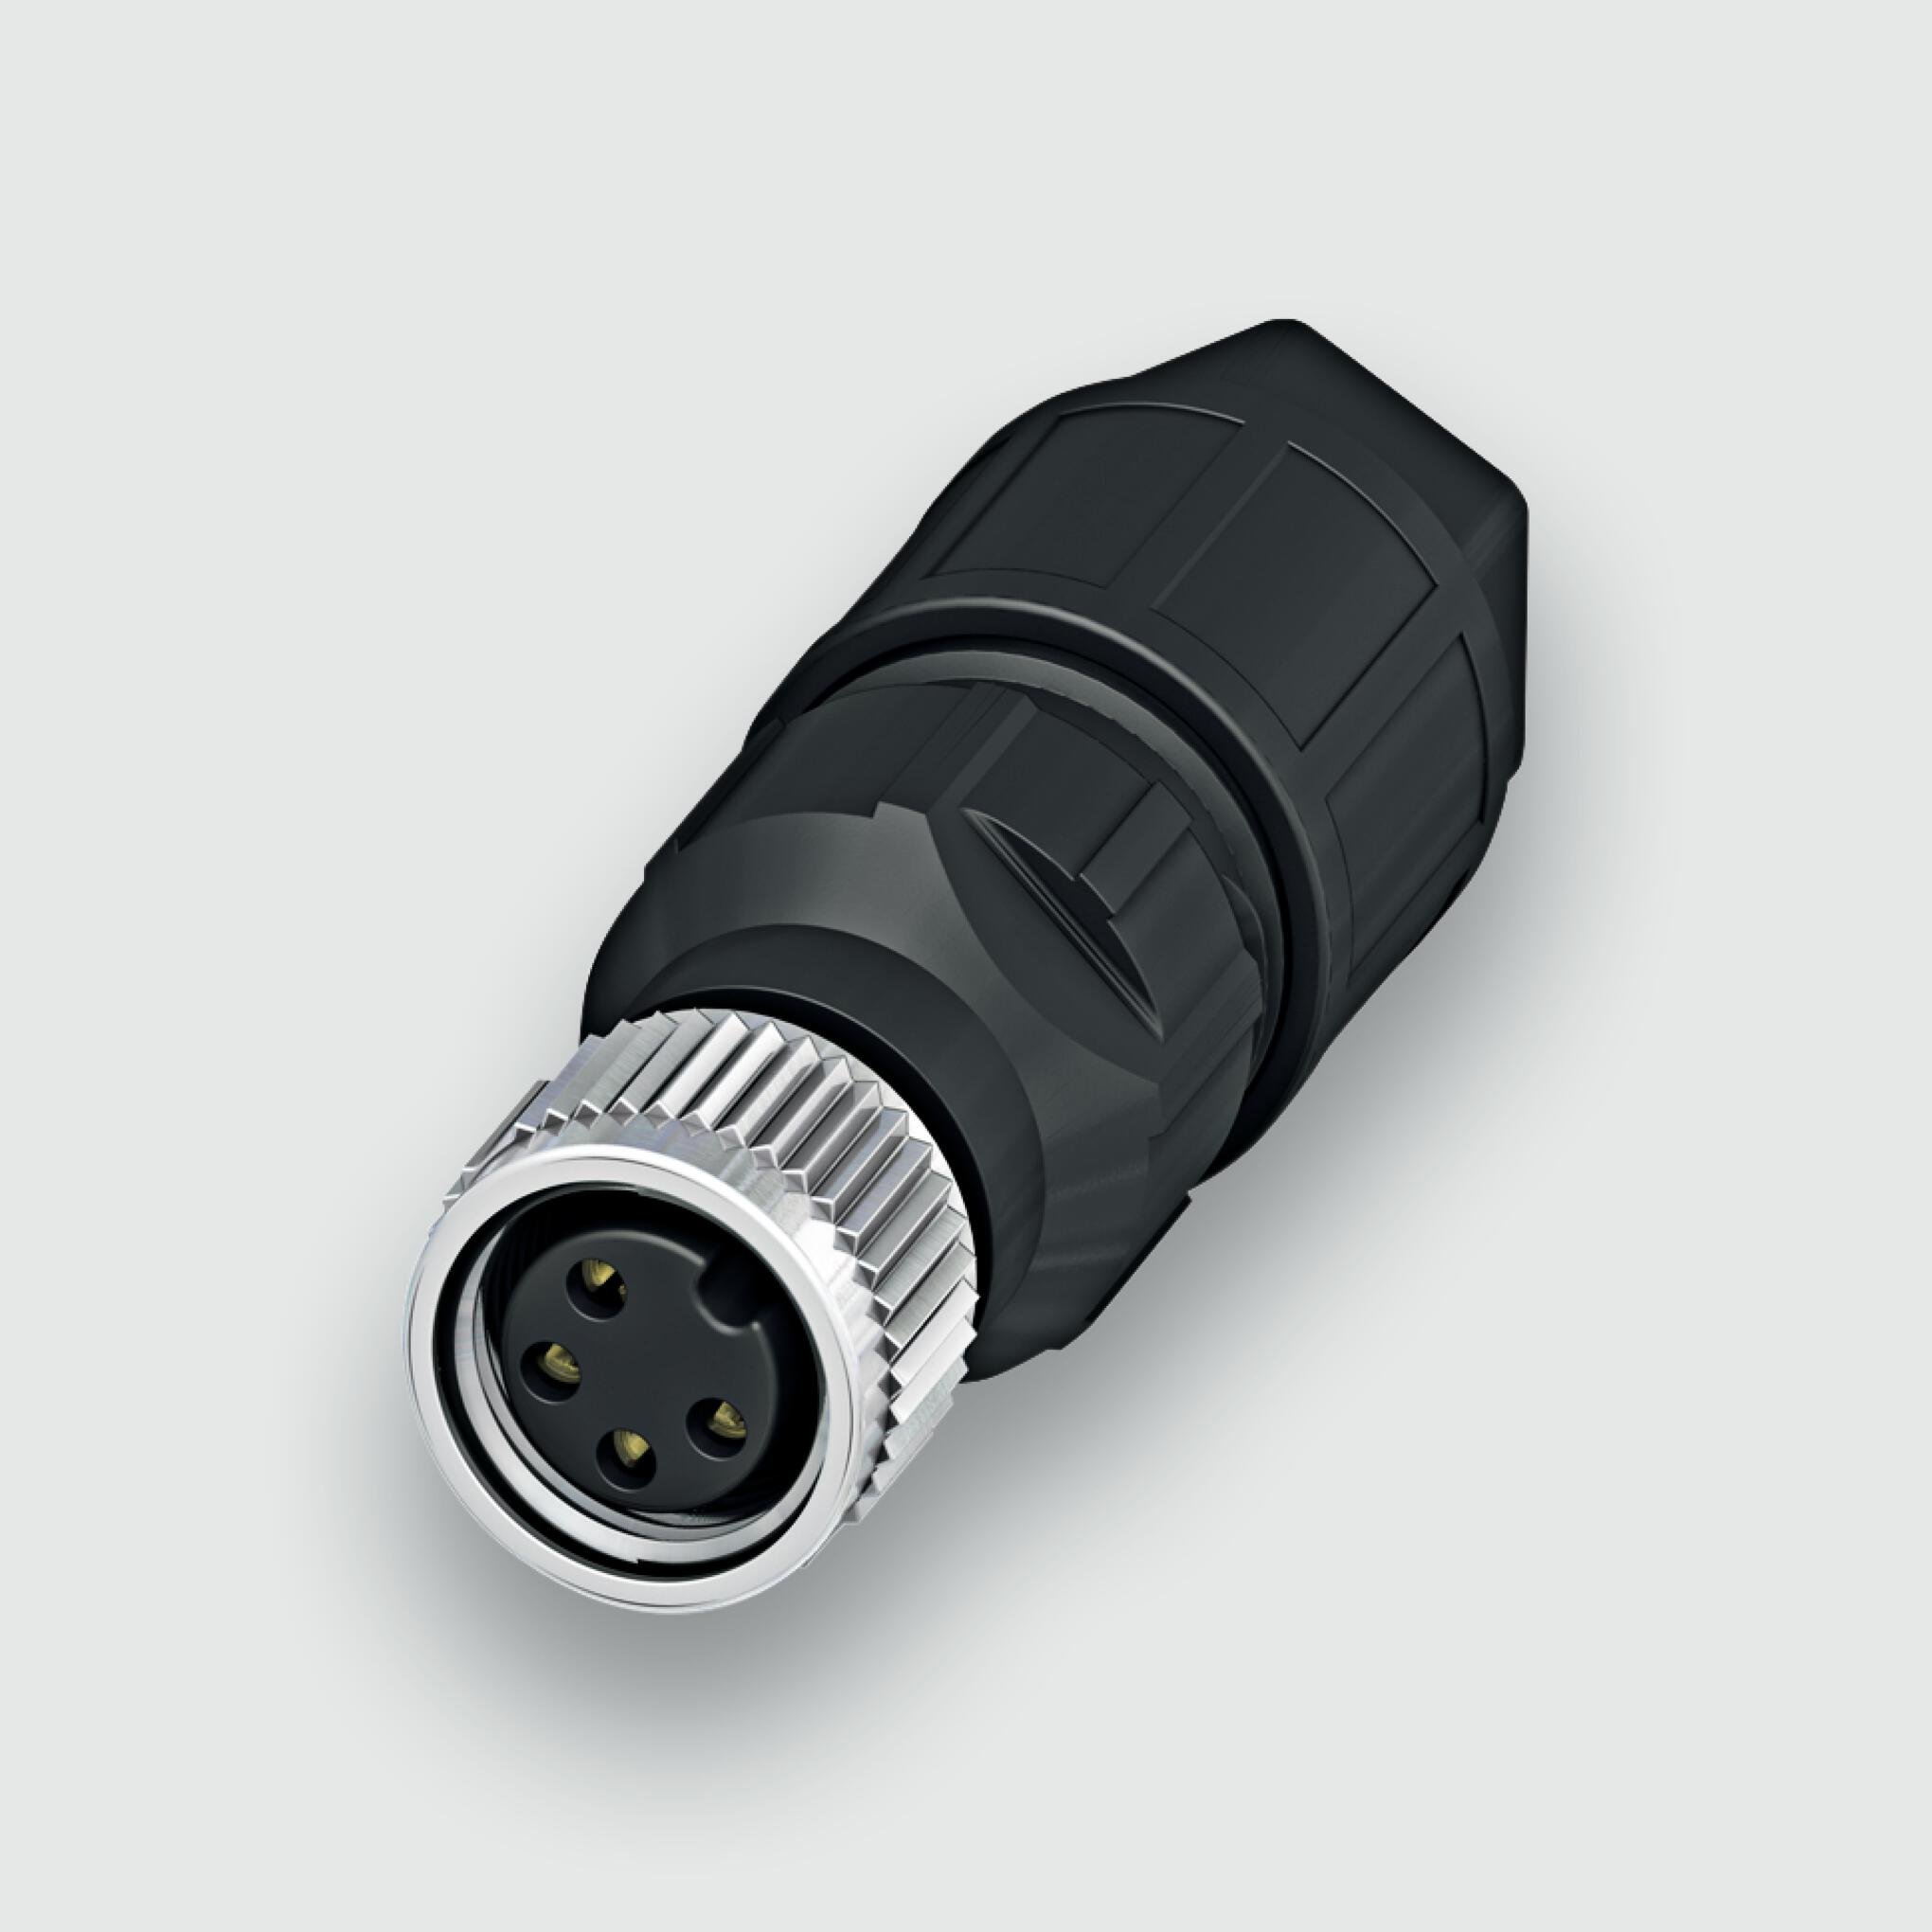 490126 - Actuator sensor interface - M8 - connector